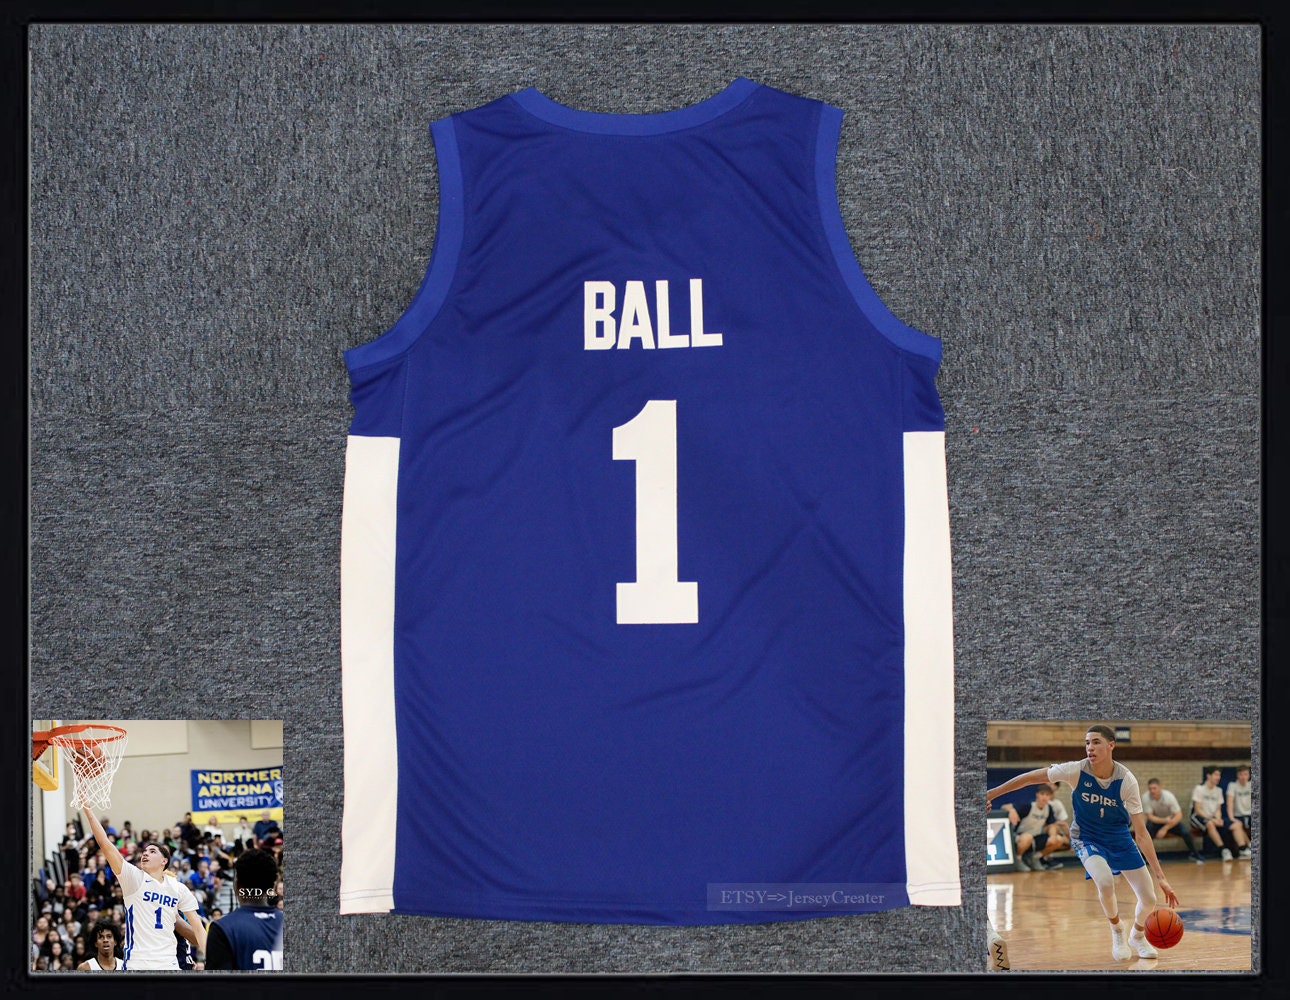 JerseyCreater Basic Jordan Clarkson #6 Team Pilipinas Philippines Basketball Jersey White Blue;All Sewn;Custom Names;Youth/Kids/Adult Size